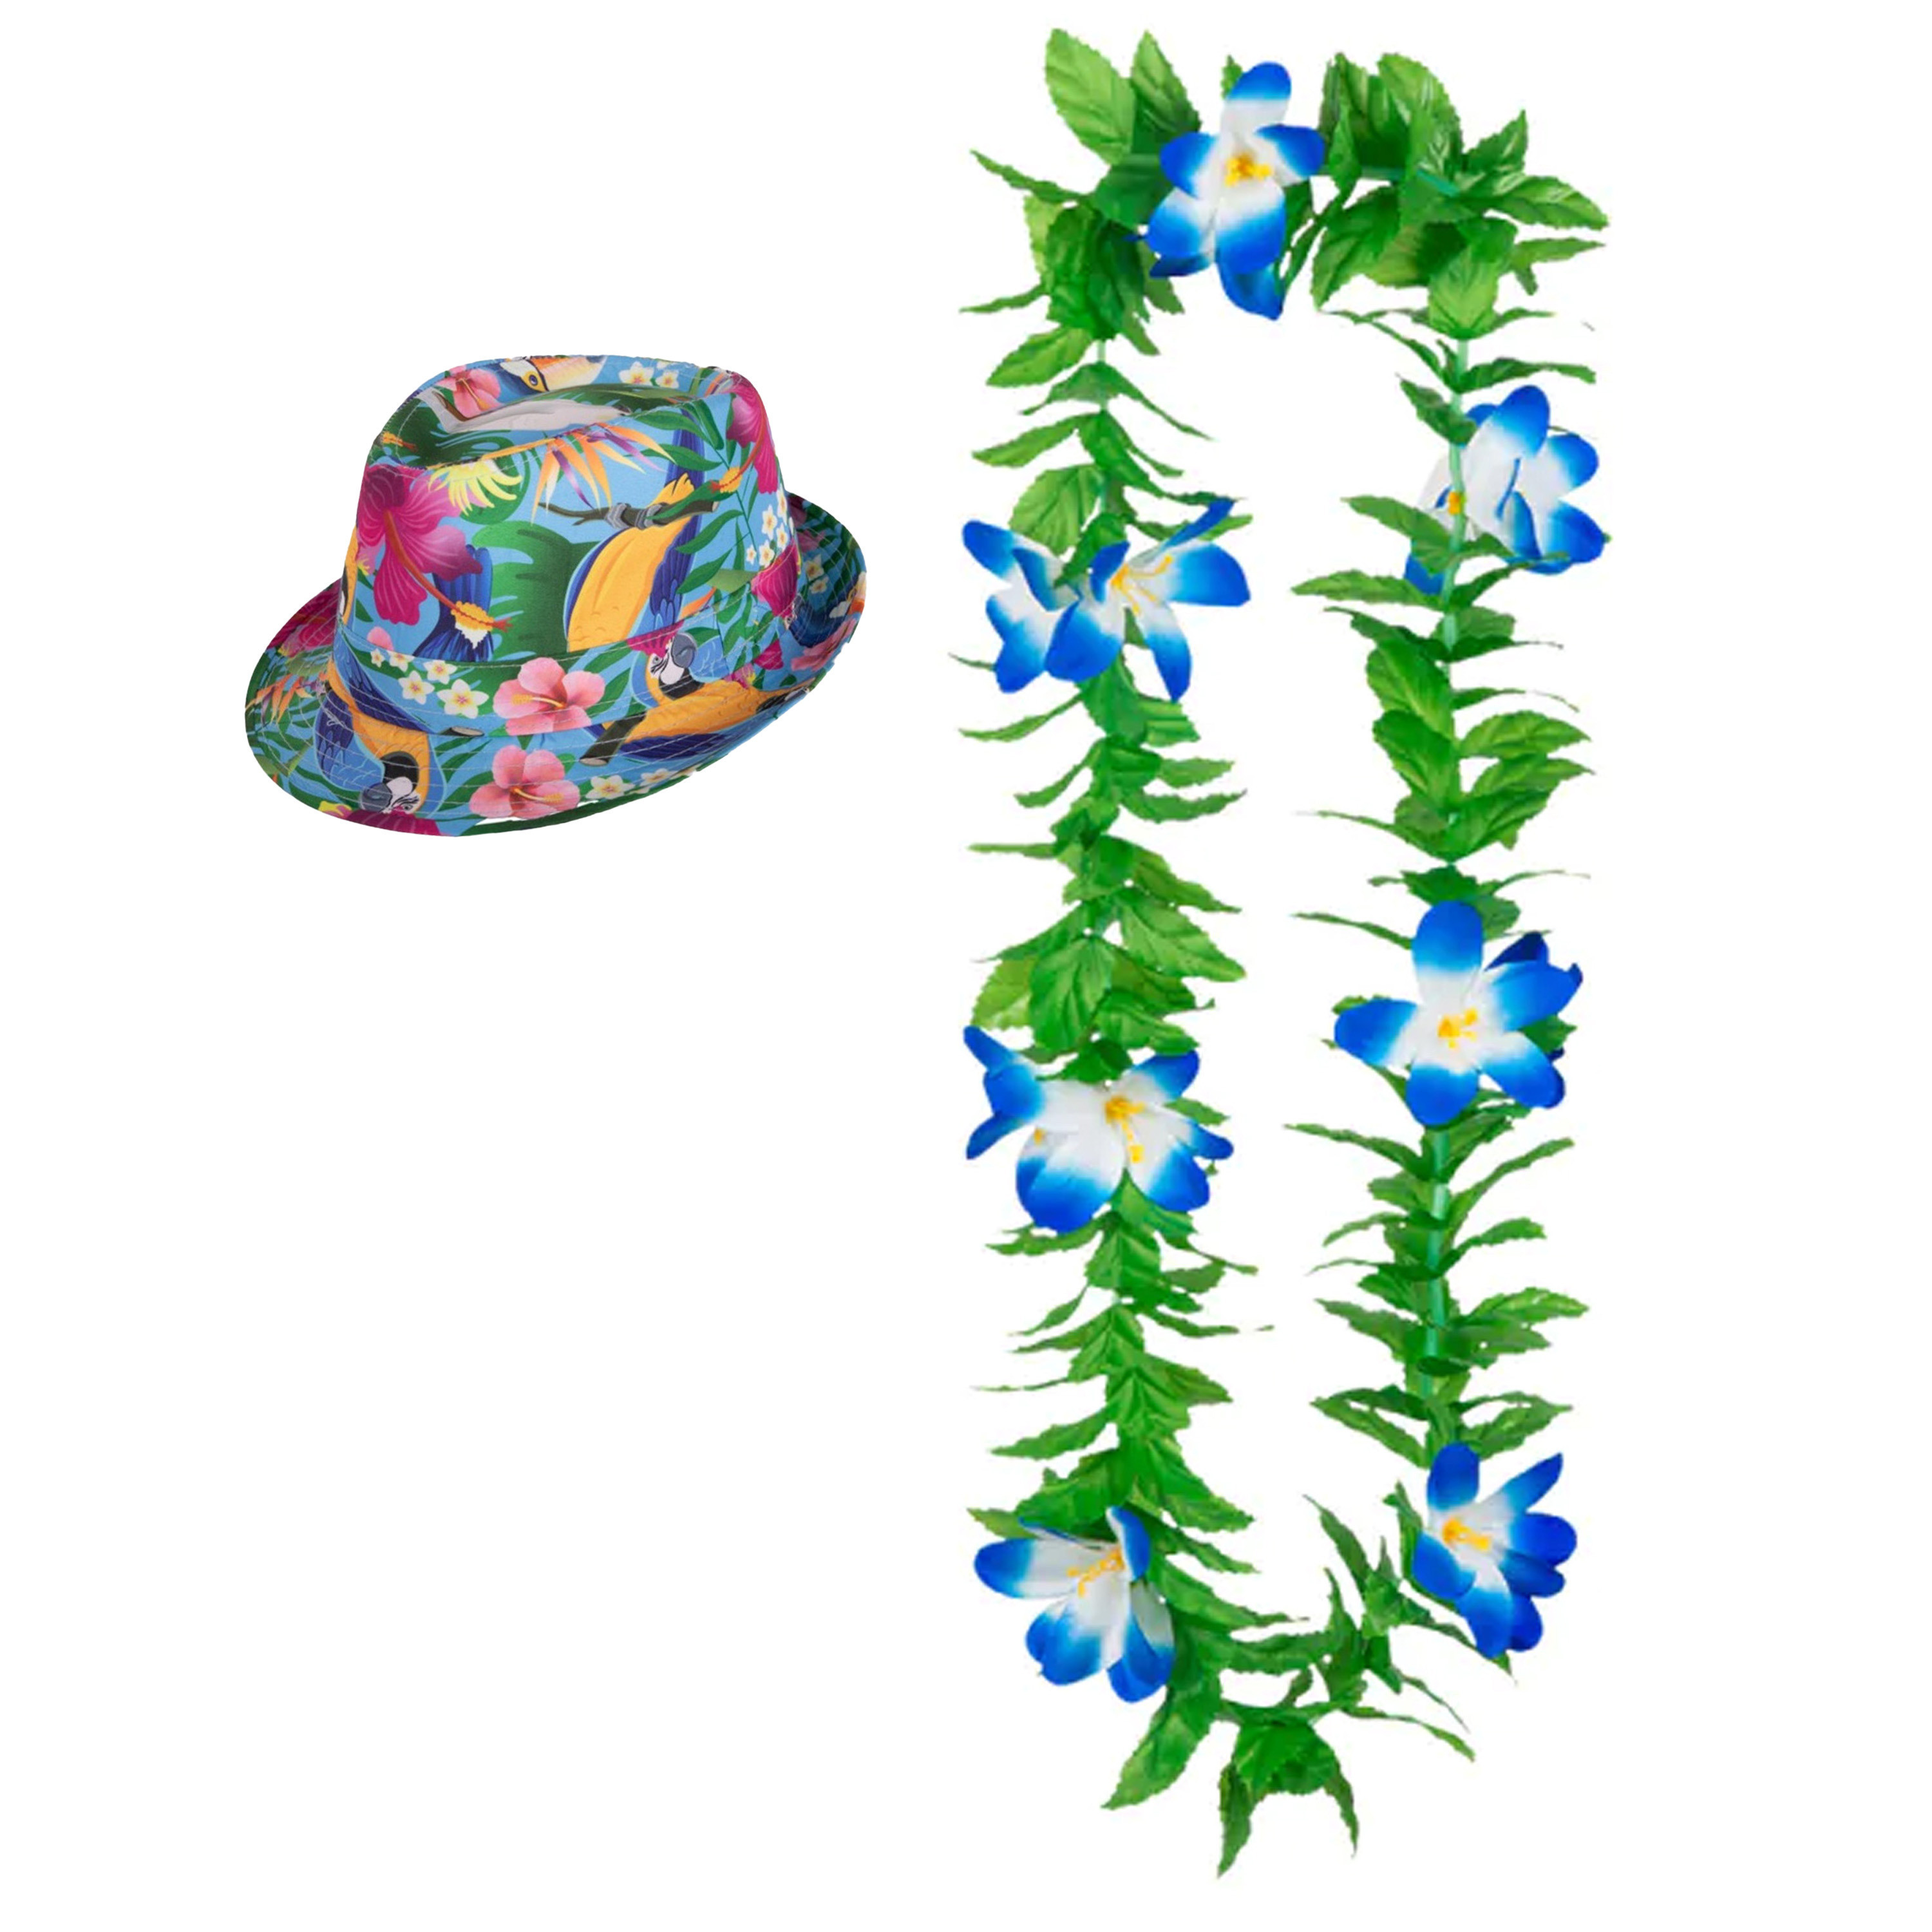 Hawaii thema party verkleedset - Hoedje Tropical print - bloemenkrans groen/blauw - Tropical toppers